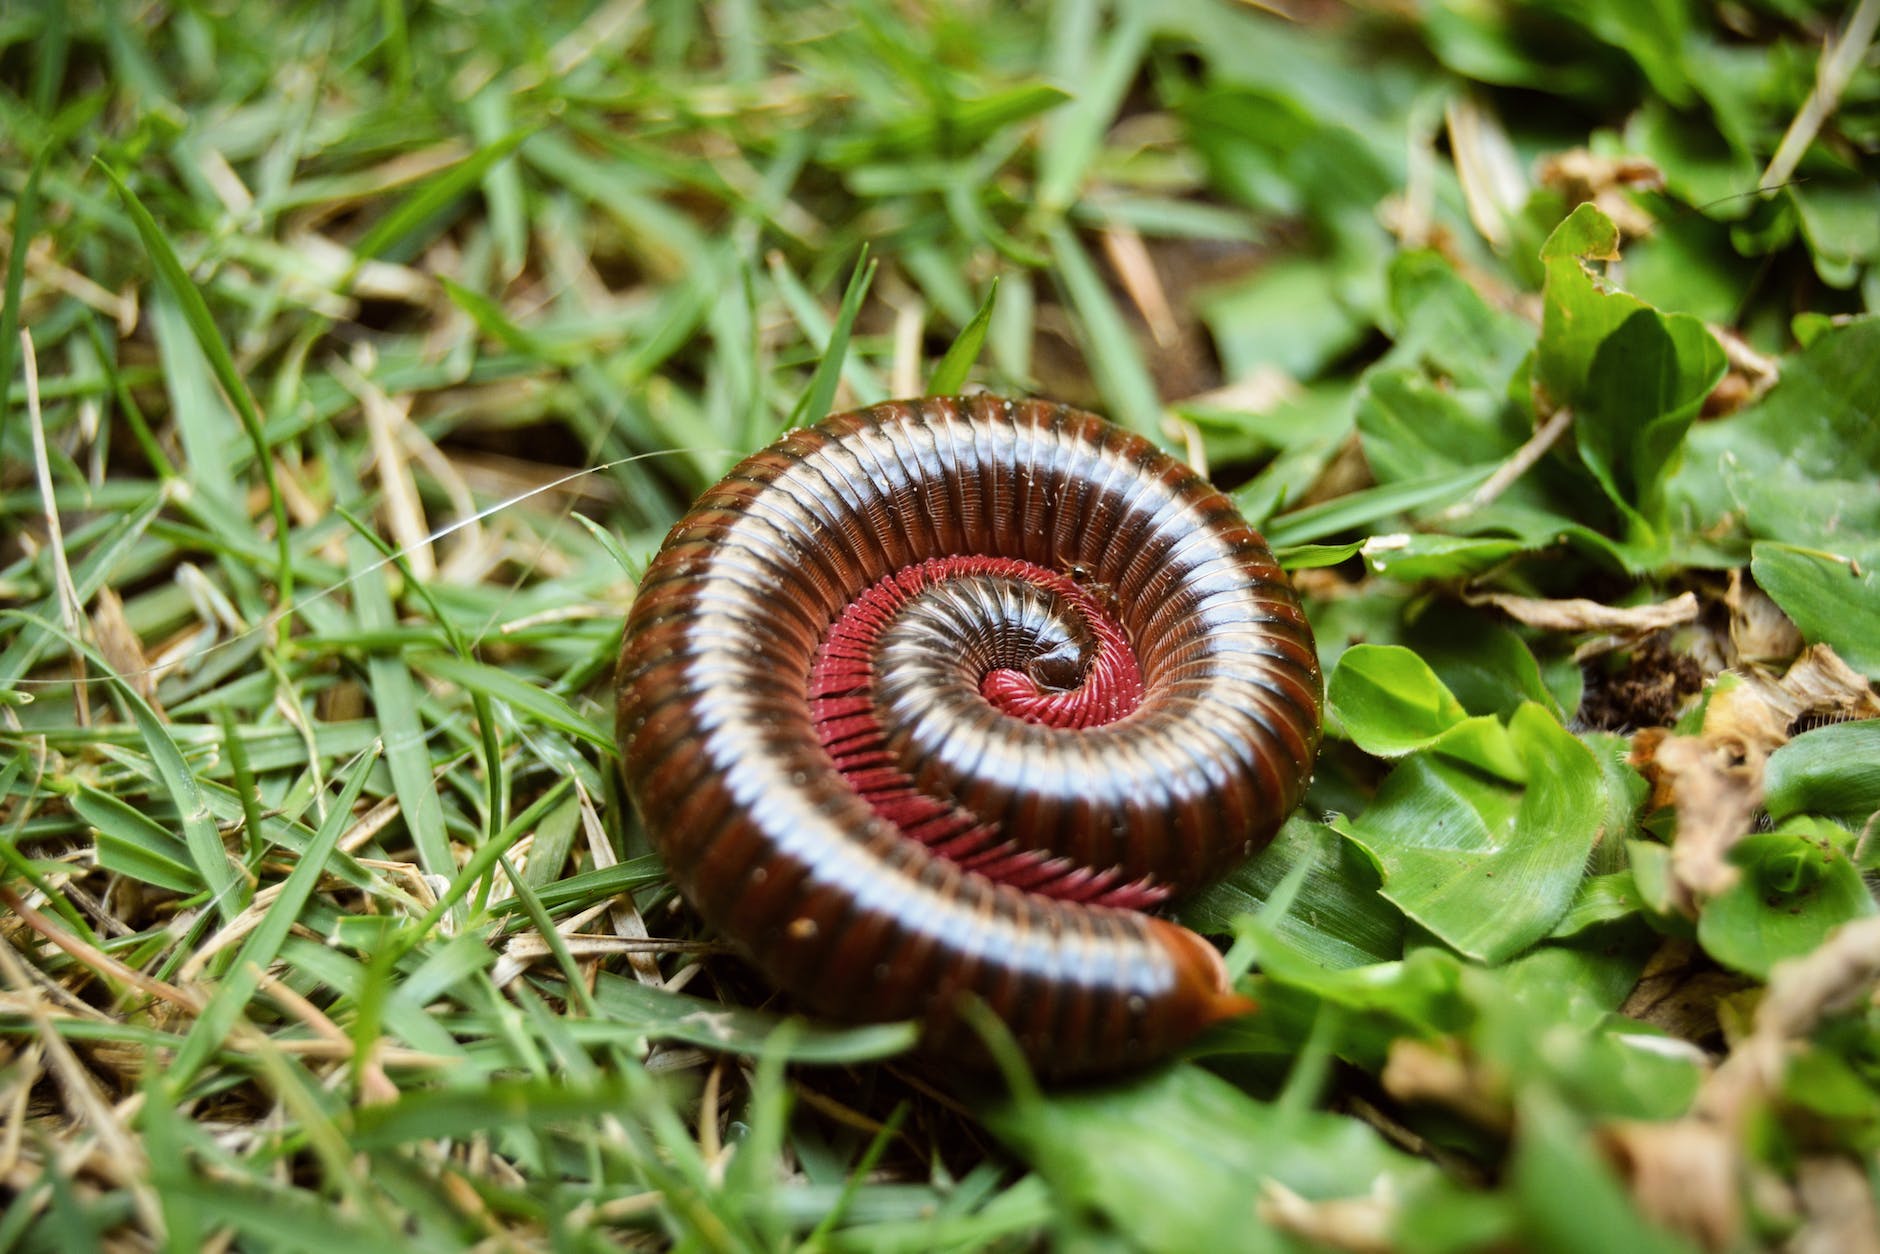 close up shot of a millipede on a grass